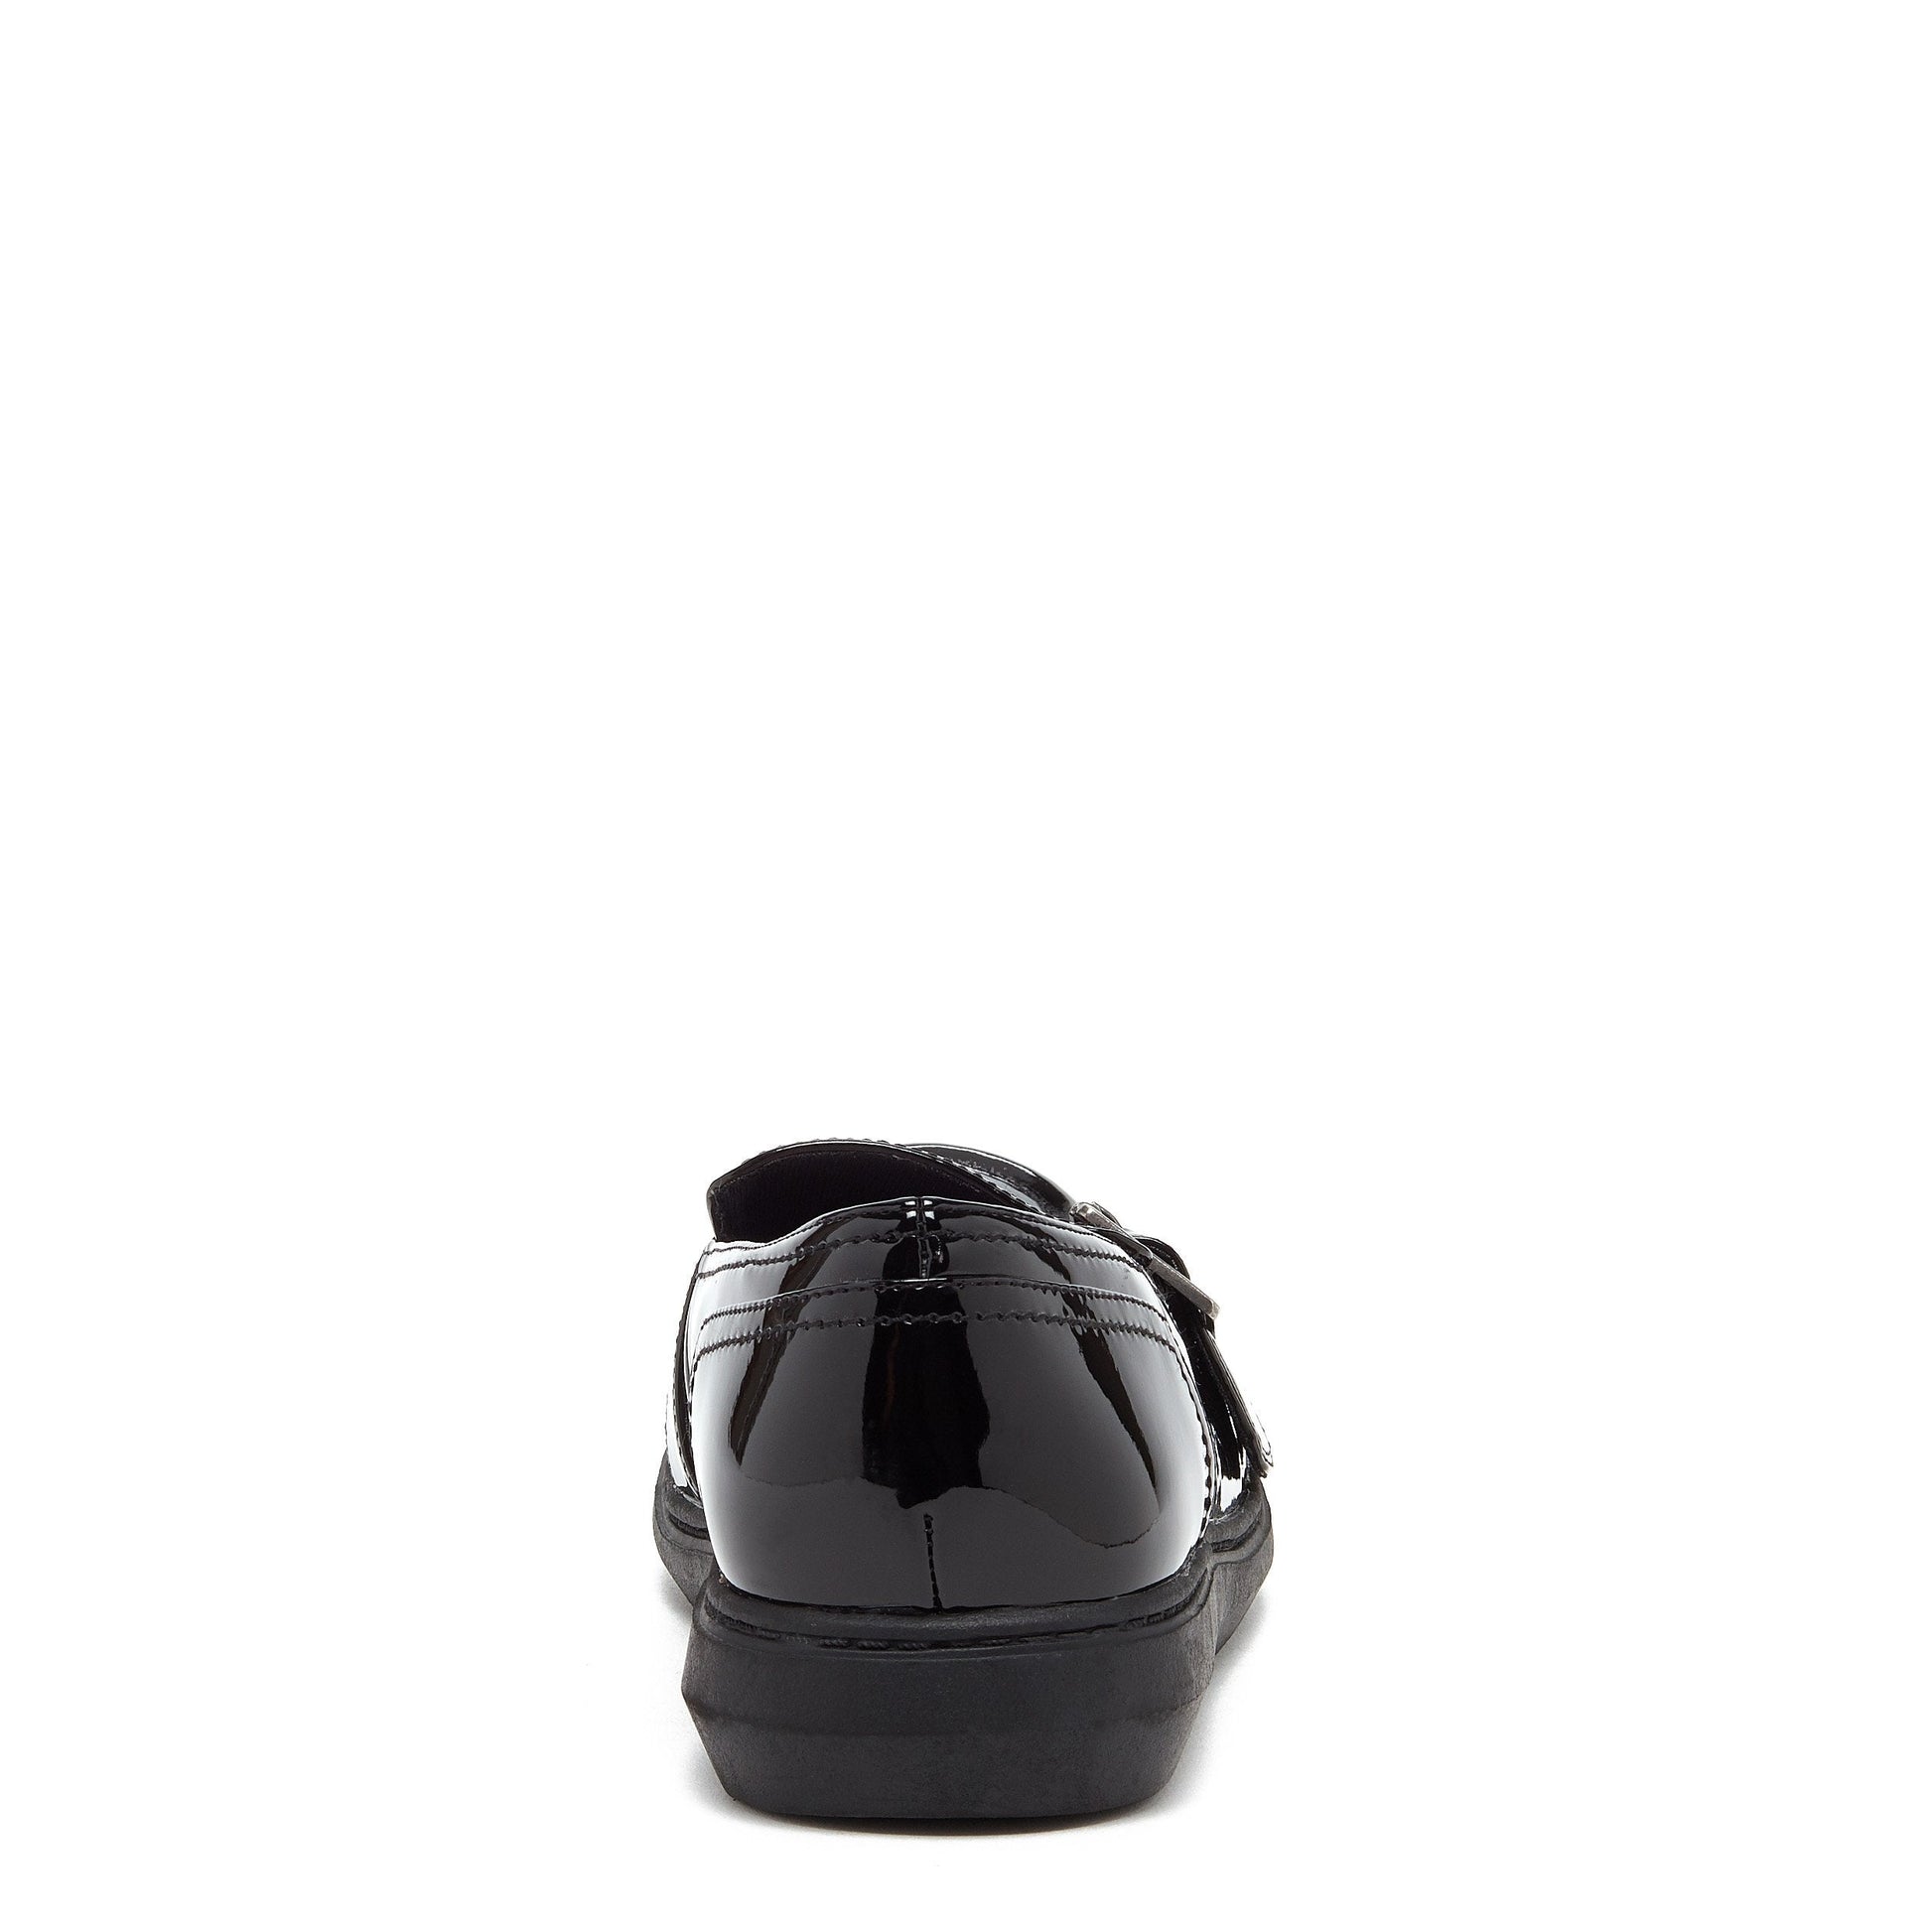 Marez Black Patent Slip-on Shoe